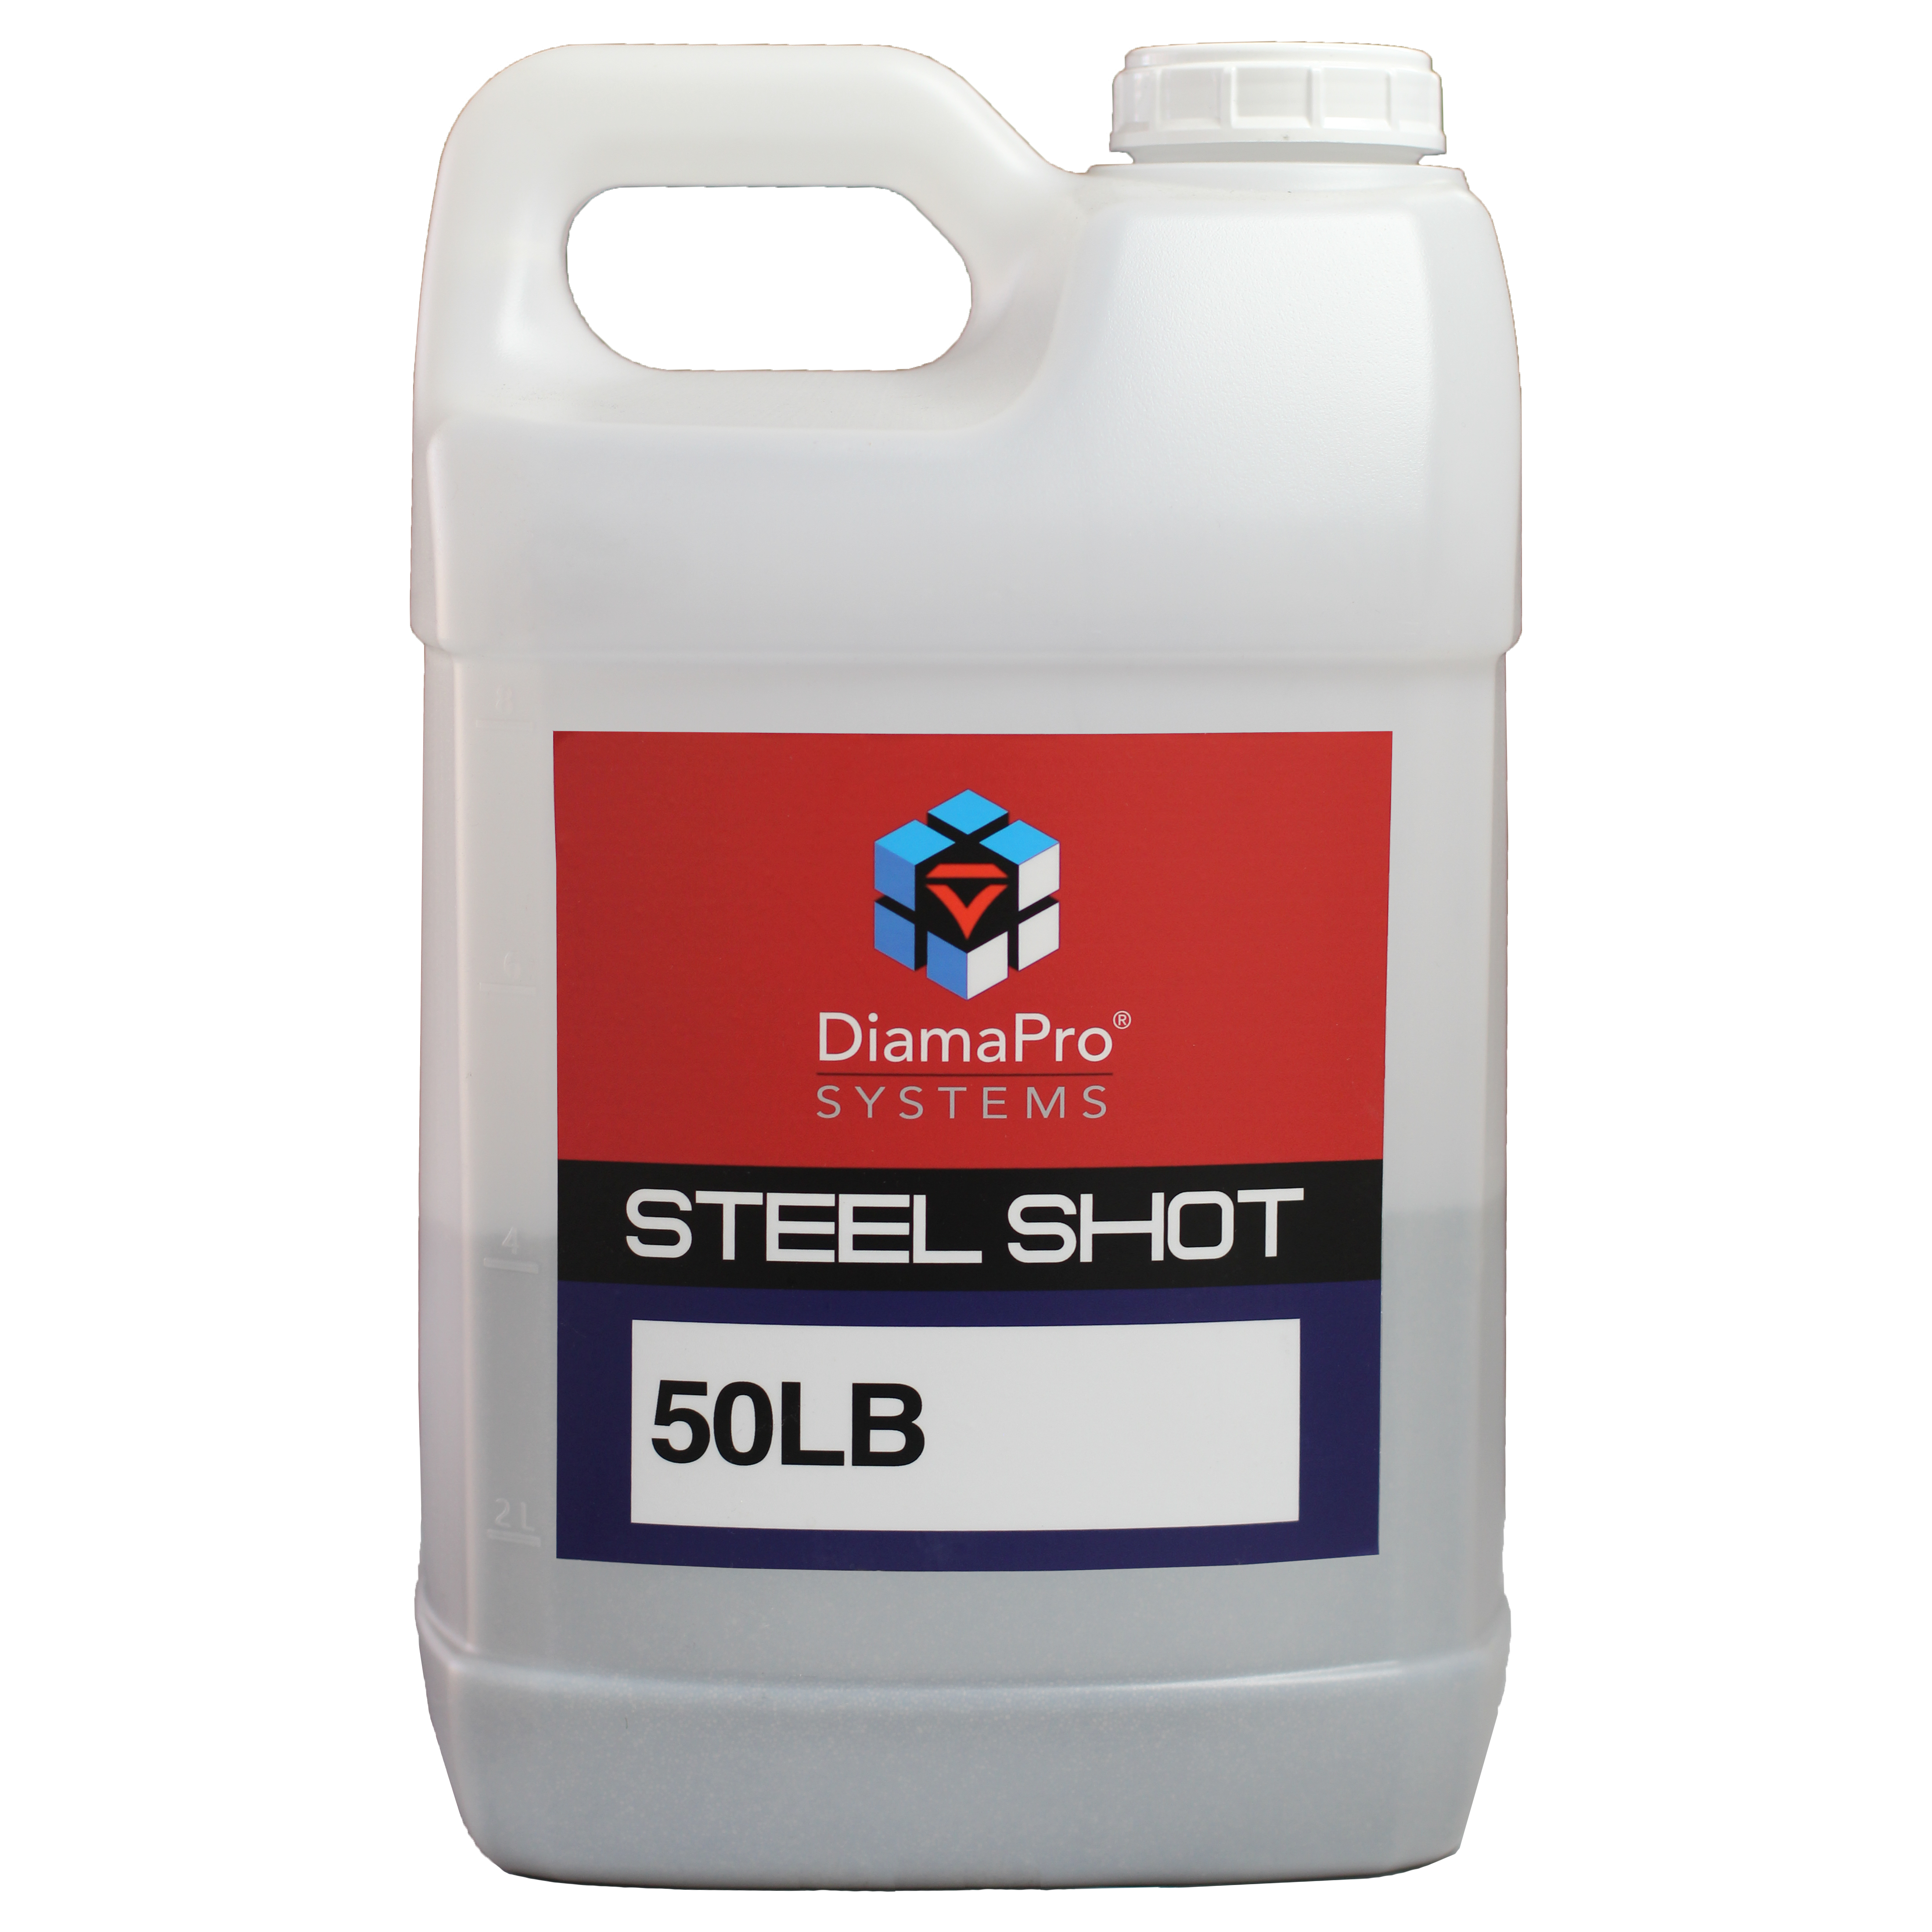 S330 Steel Shot 50lbs, Steel Shot Blasting Media